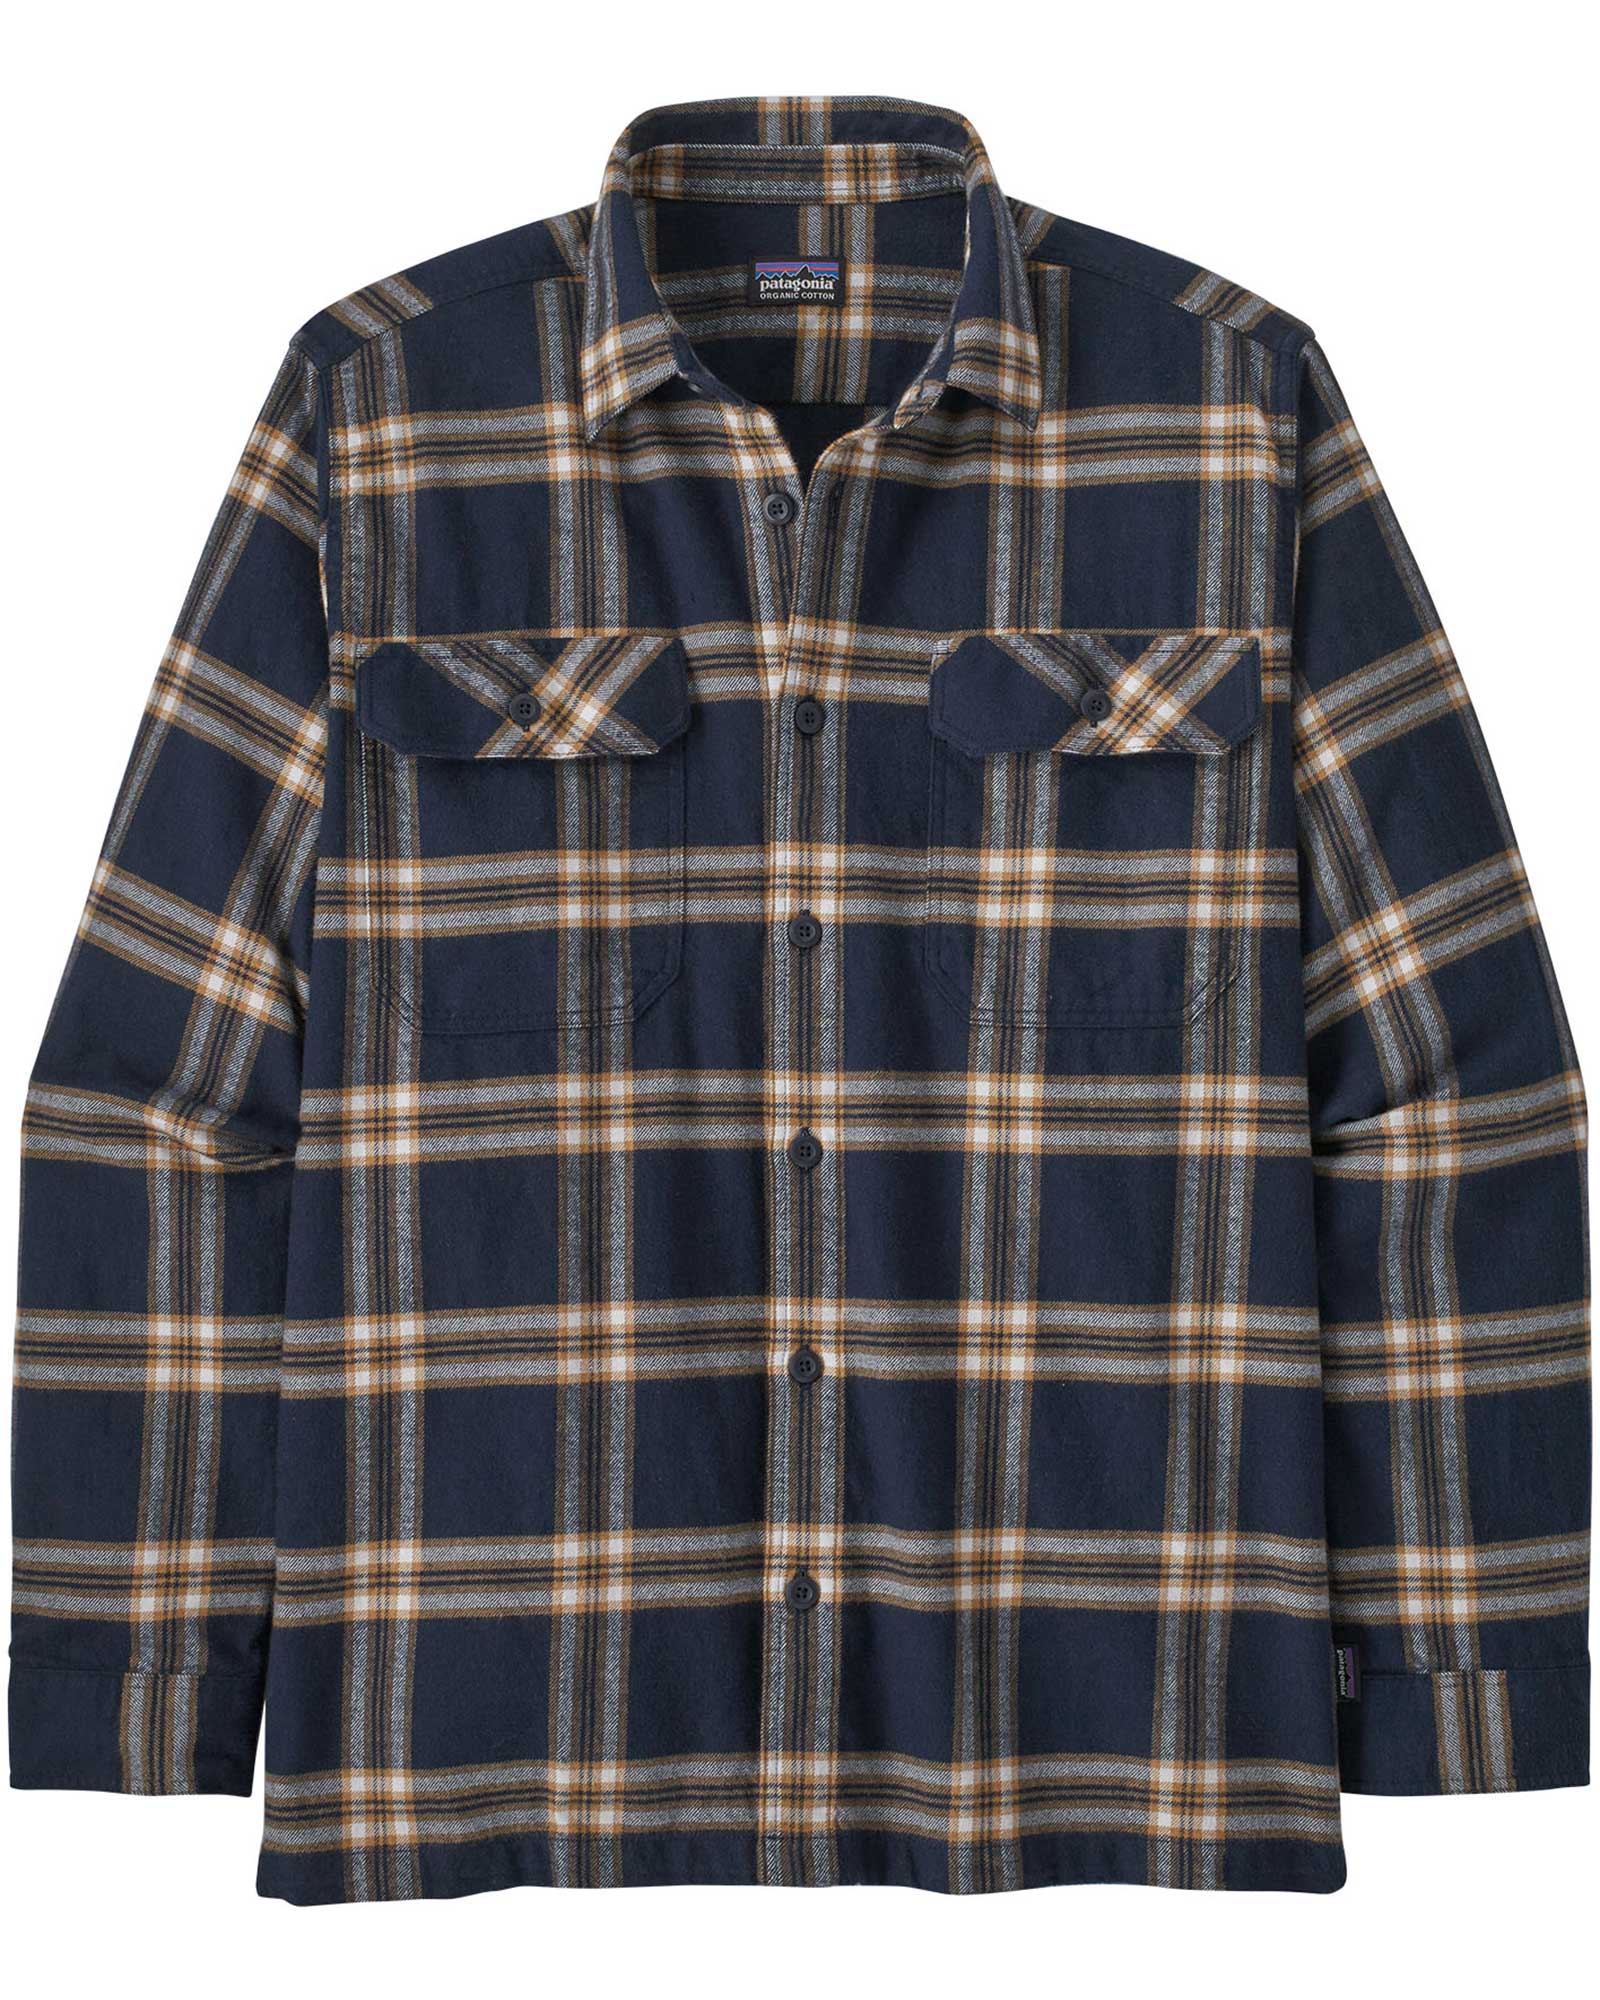 Patagonia Men’s Organic Long Sleeve Flannel Shirt - New Navy/North Line XL